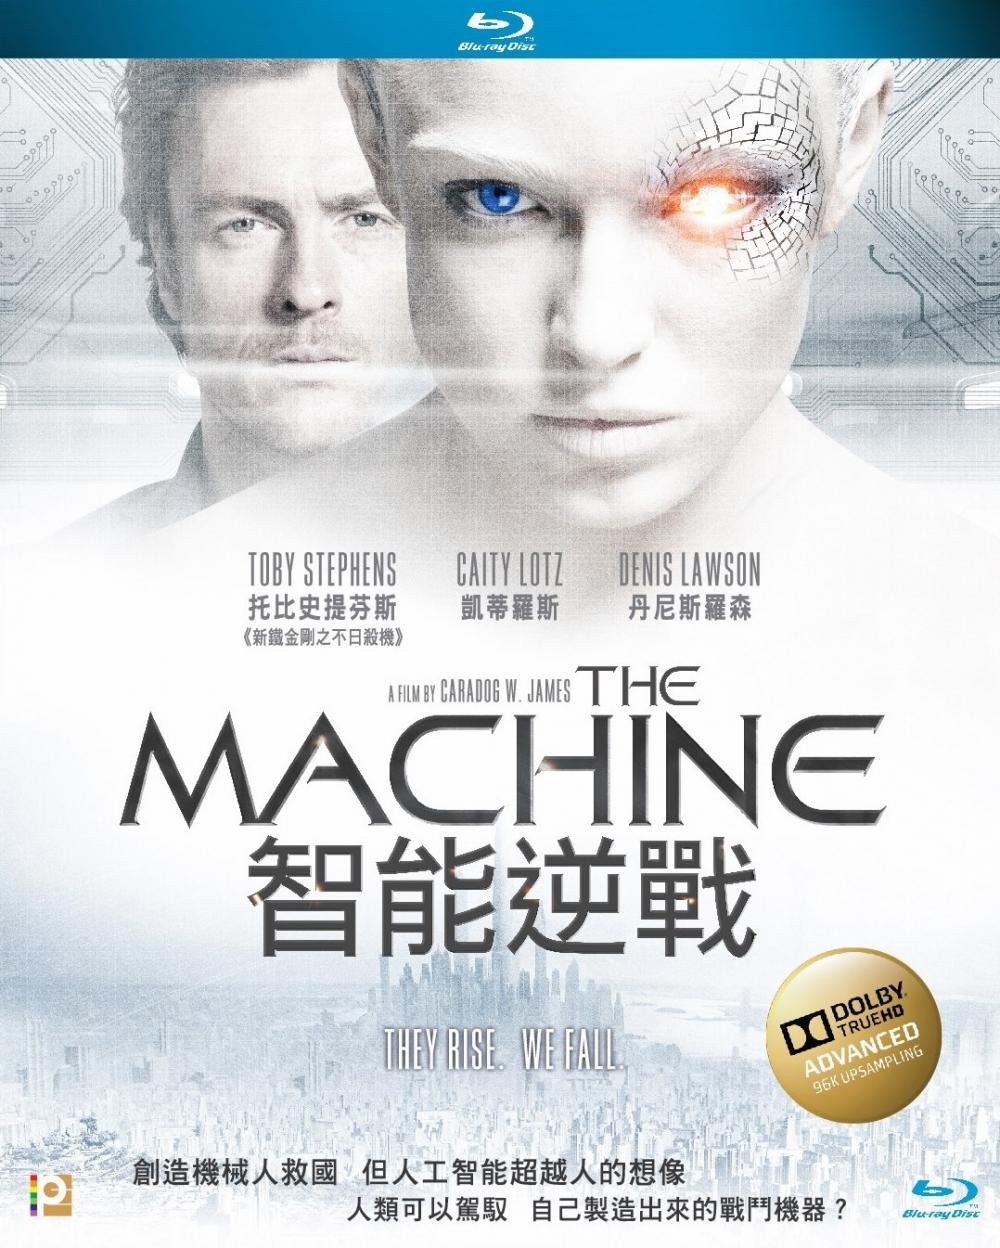 Hong Kong 2014 Blu-ray Cover